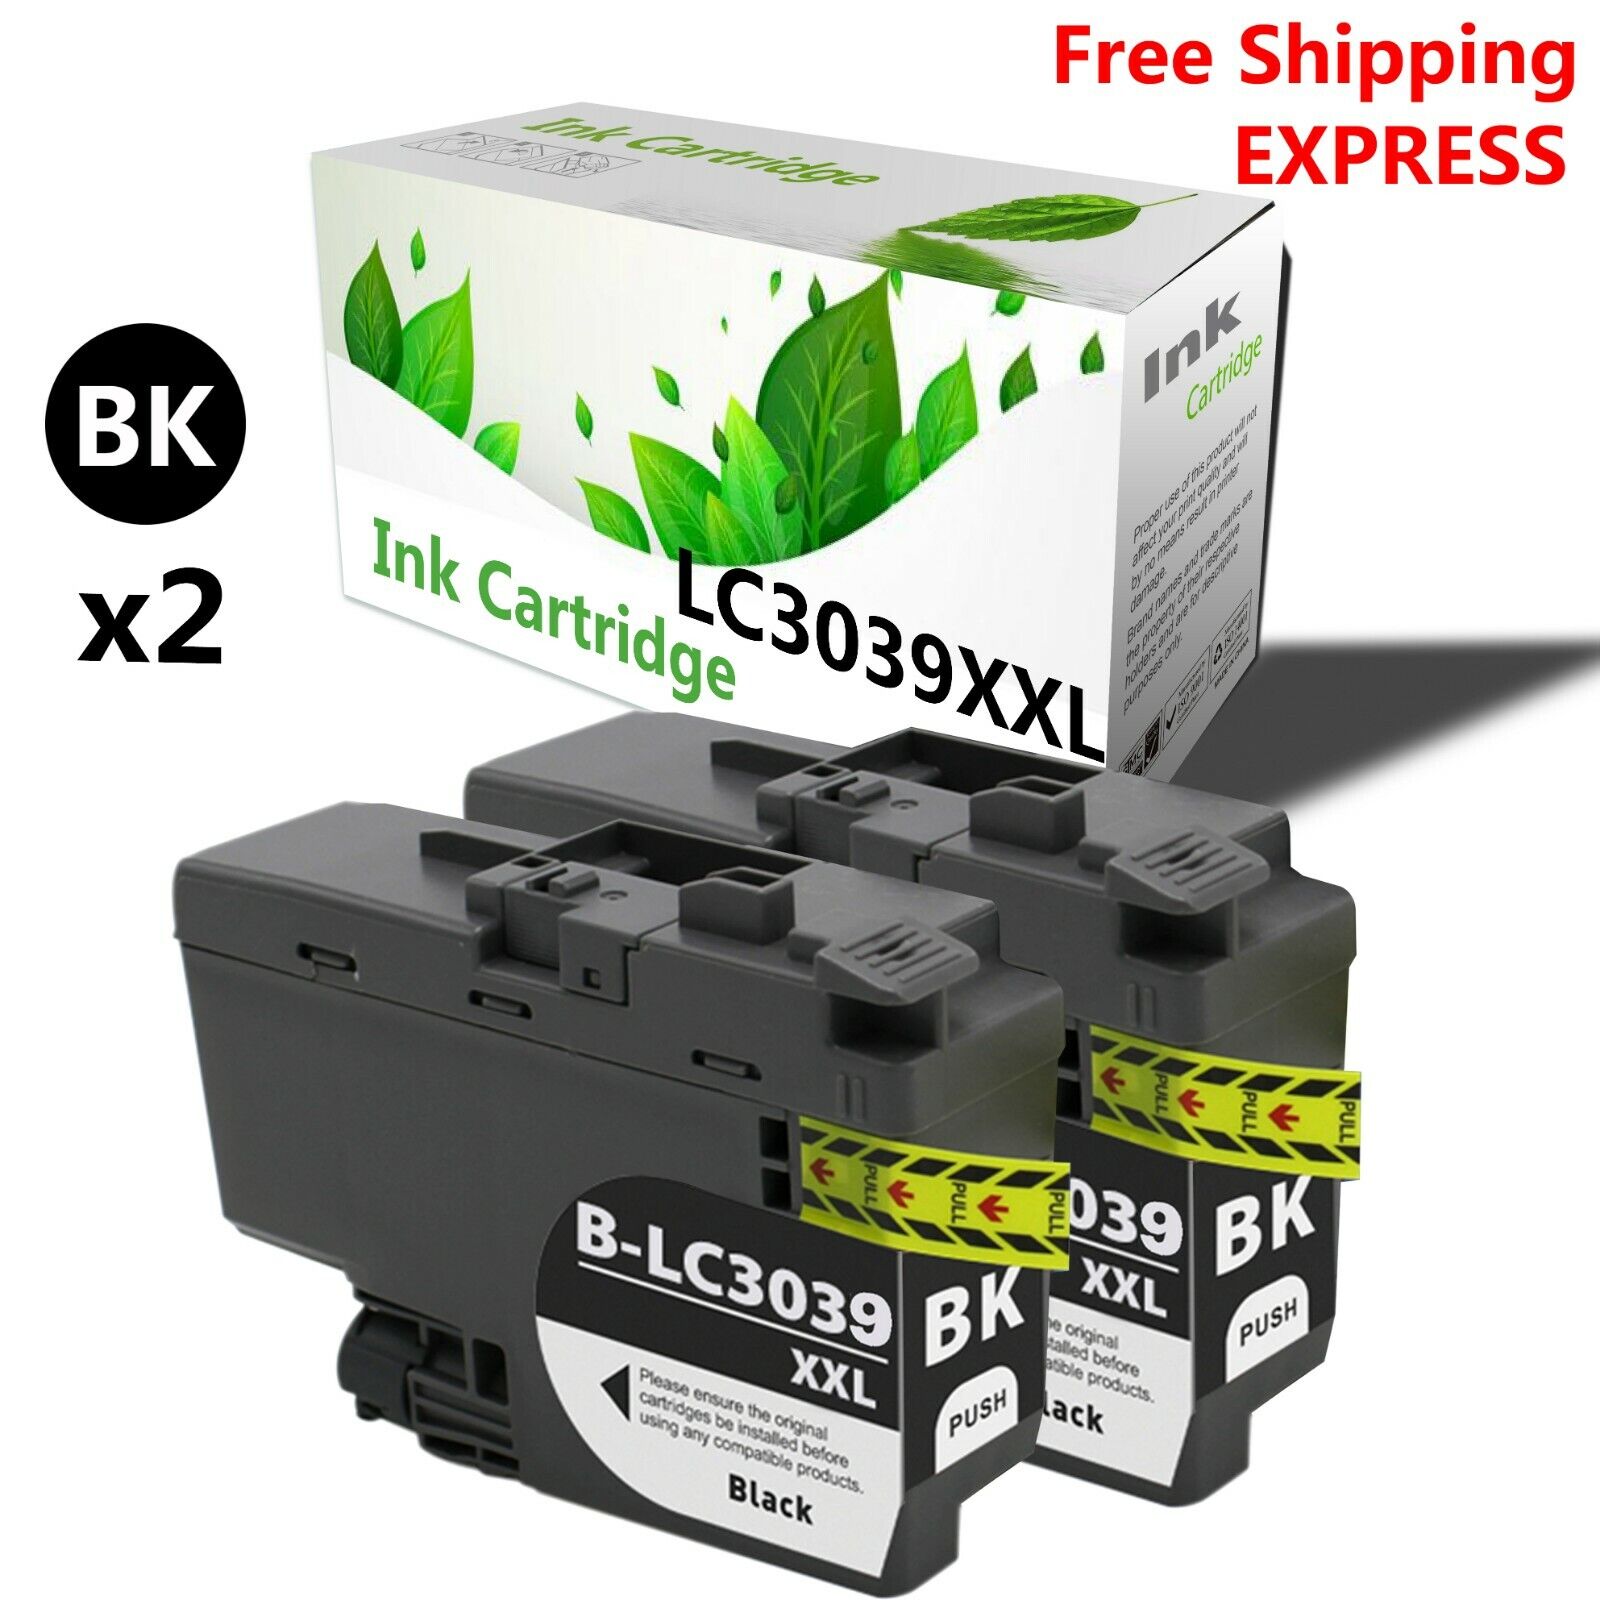 2PK LC3039 XXL LC3039XXL Black Ink Cartridge for Brother MFC-J6545DW Printer